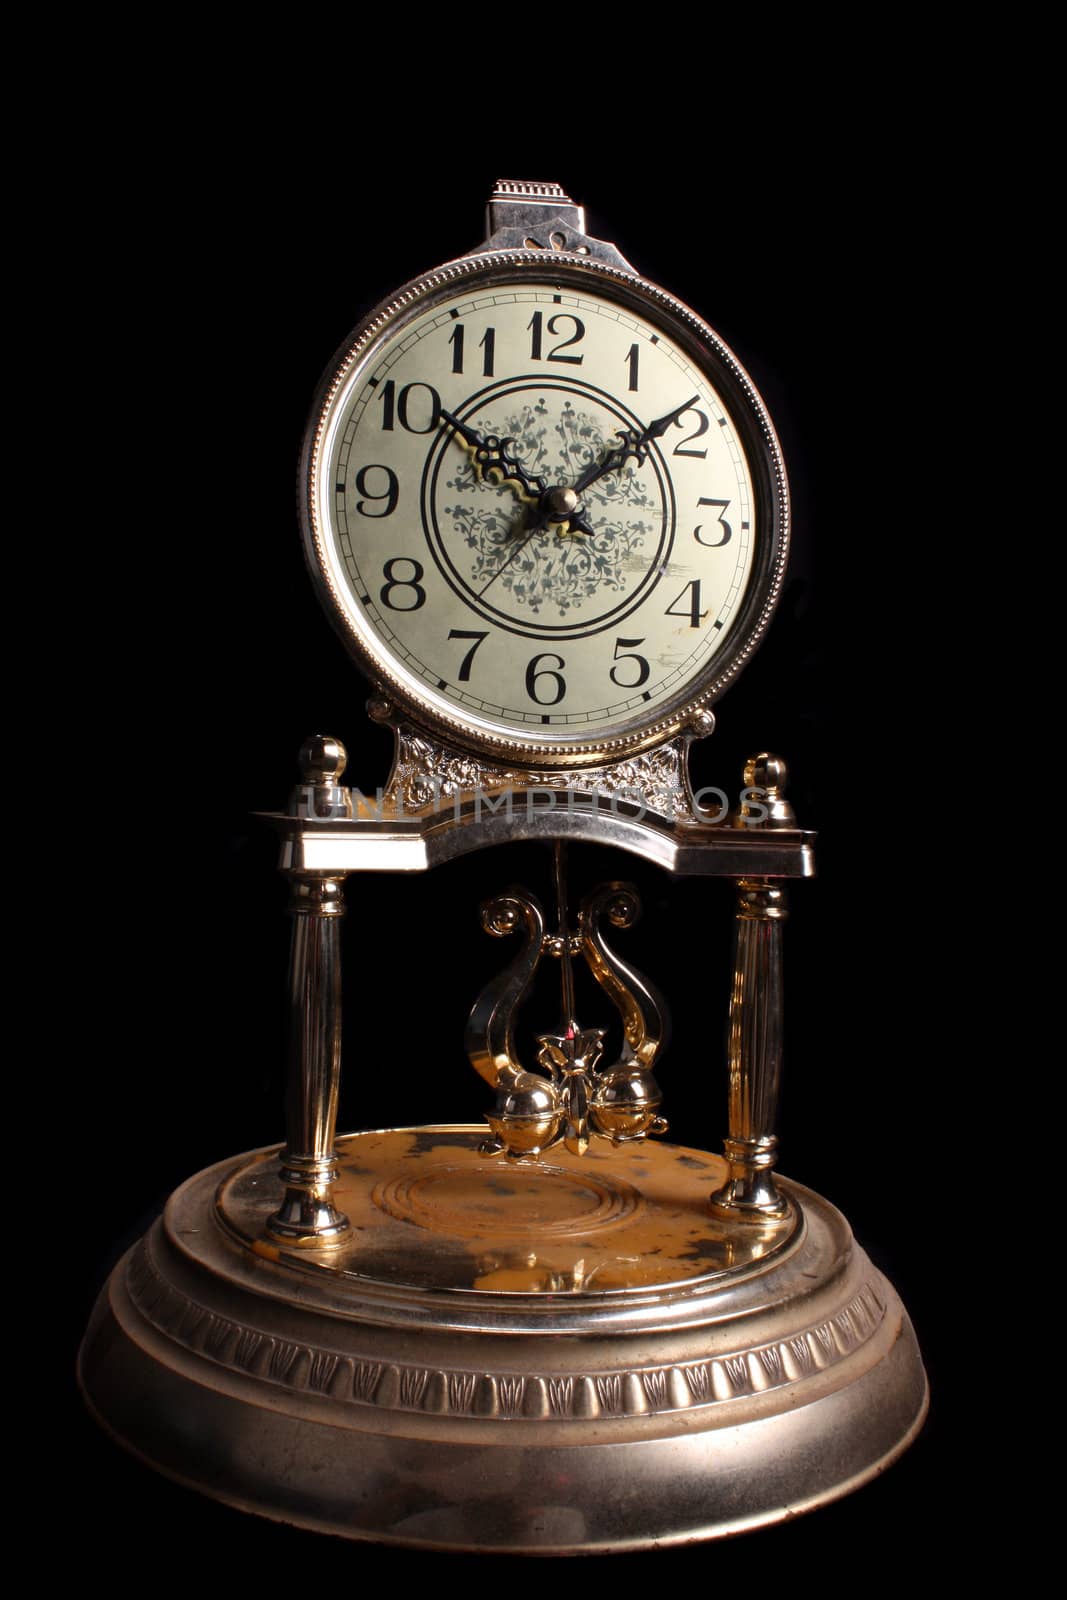 A vintage metallic clock, isolated on black studio background.